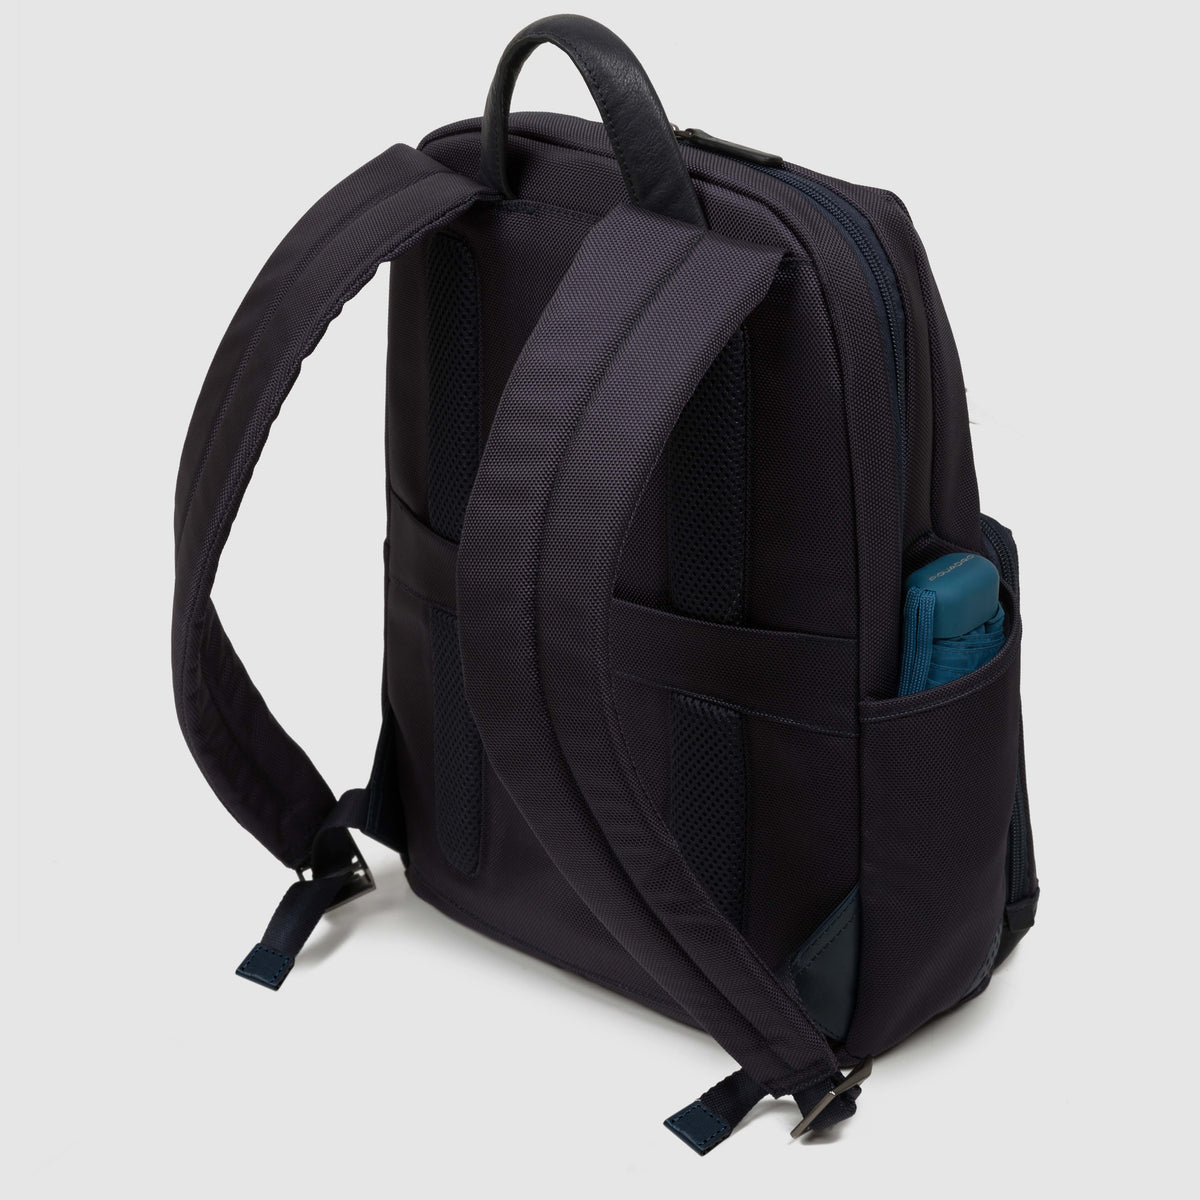 10.5"/9.7" laptop/iPad® rucksack ready for